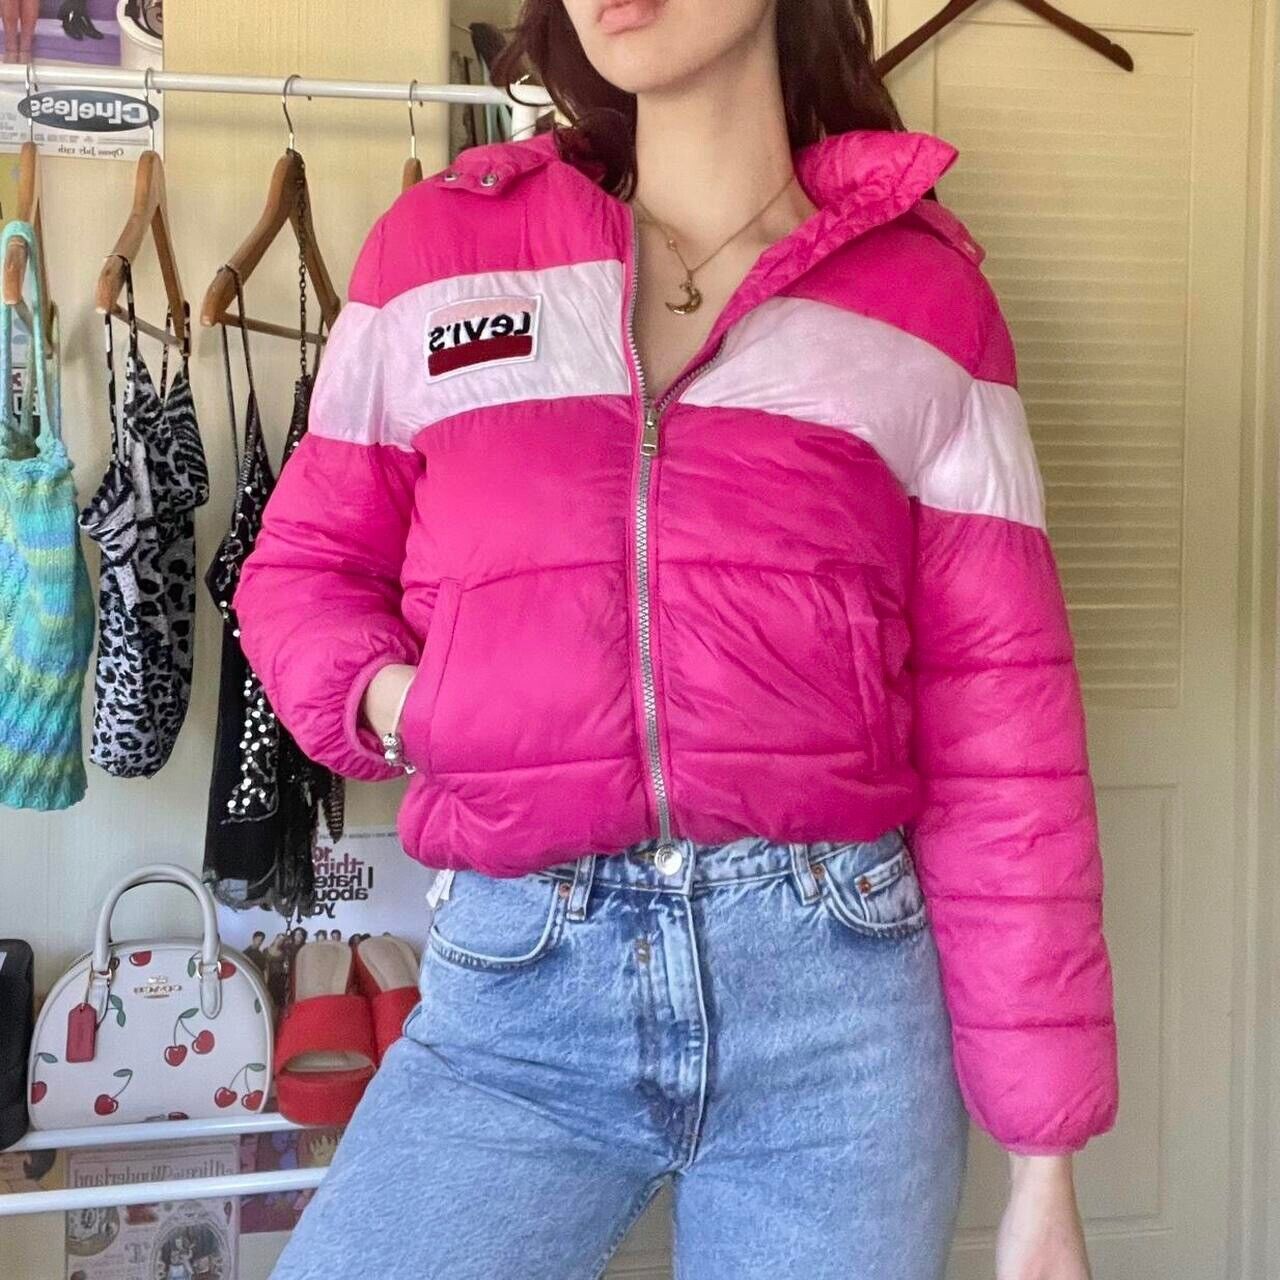 Levis pink puffer jacket - image 1